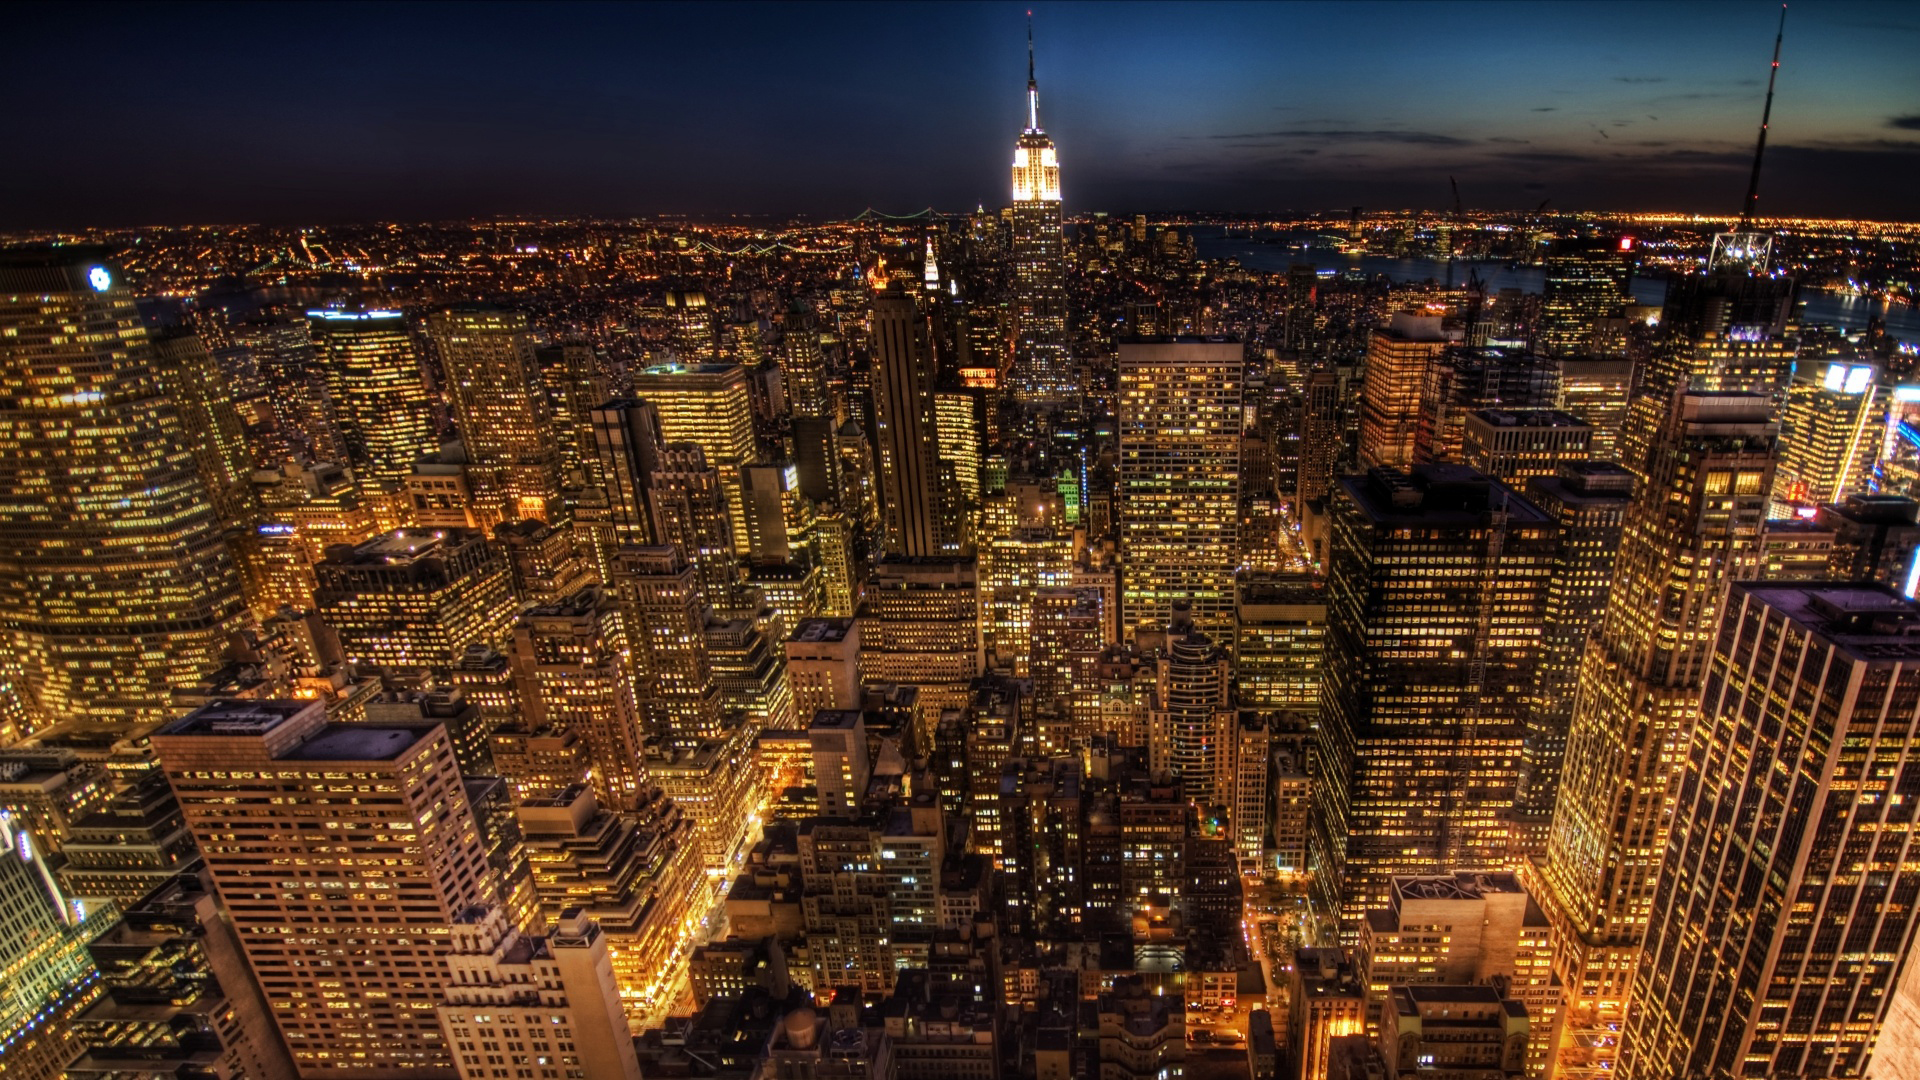 Download wallpaper Night lights of Manhattan